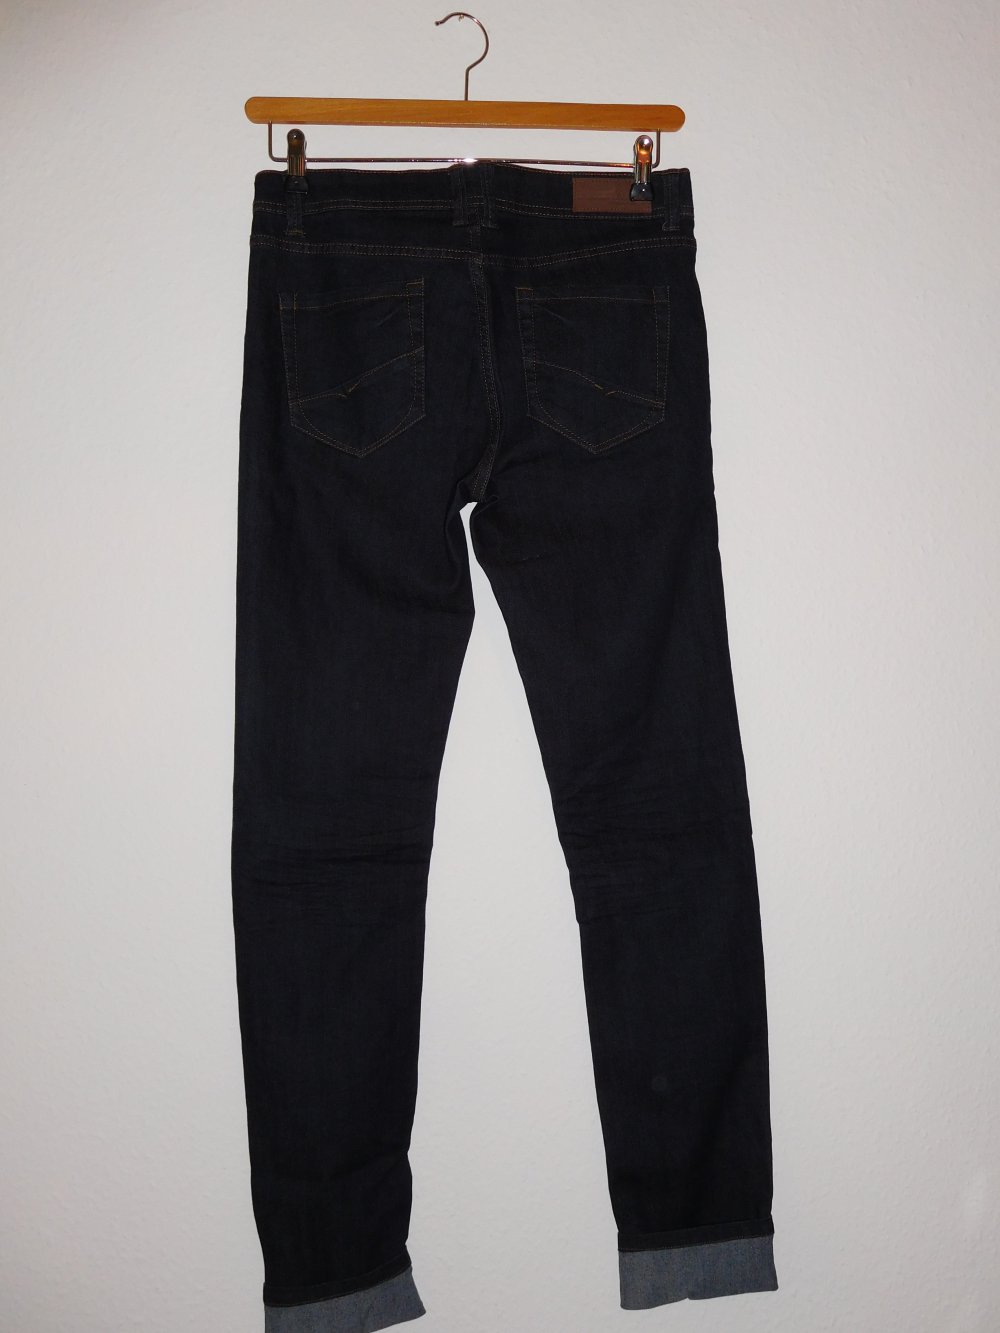 Jeans Röhre Skinny / Amisu / W30 L34 42 / vintage Blogger Denim